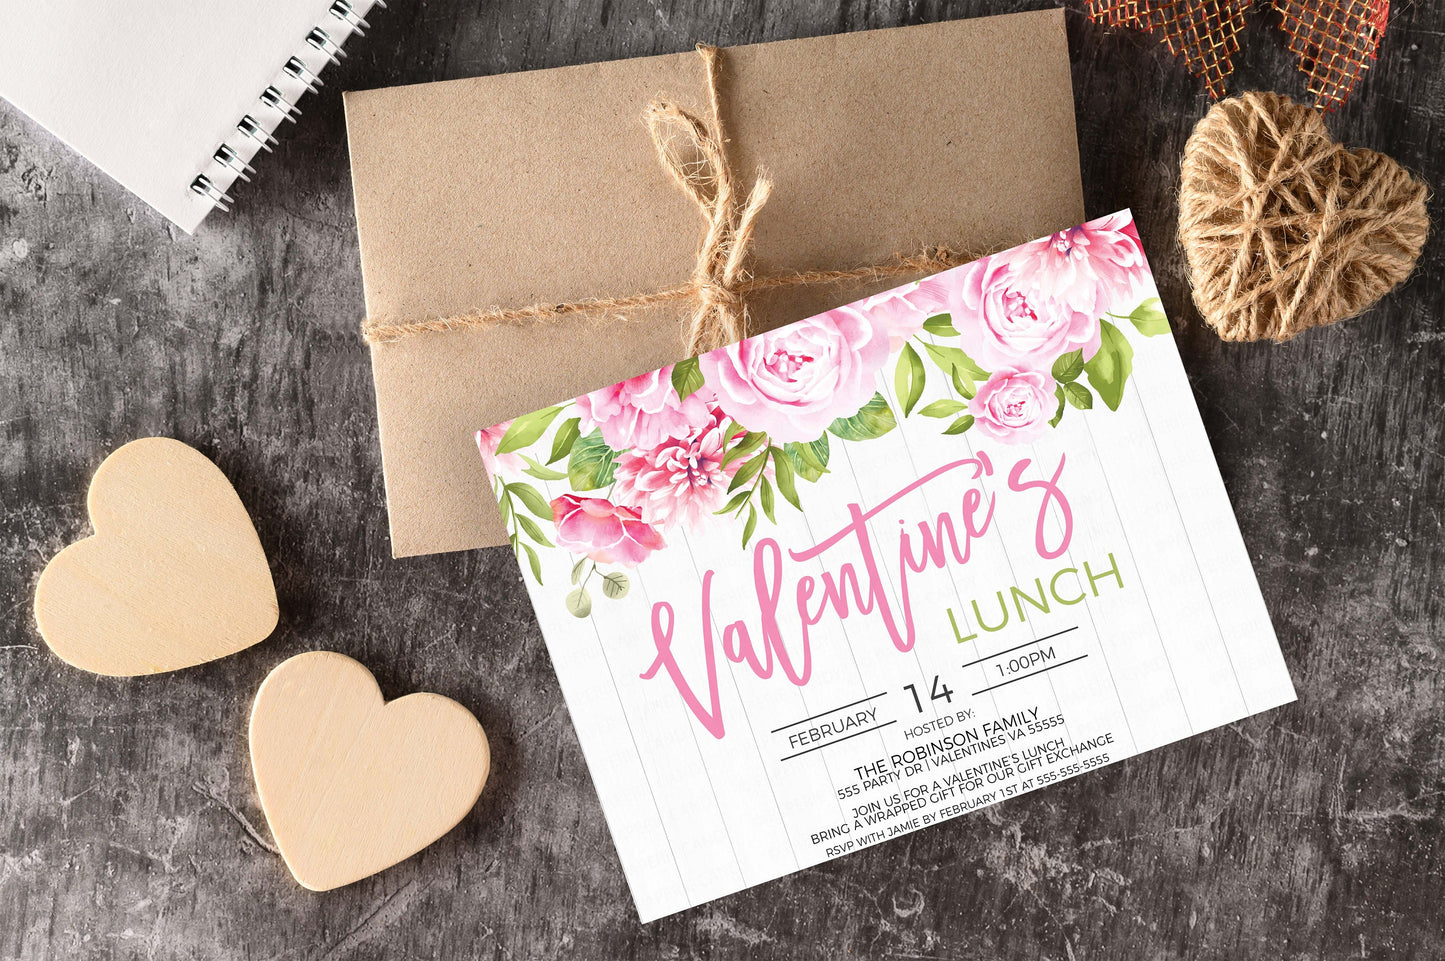 Valentine's Day Lunch Invitation, Editable Valentine Brunch Invite, Employee Appreciation Party, Client Appreciation, Editable Printable